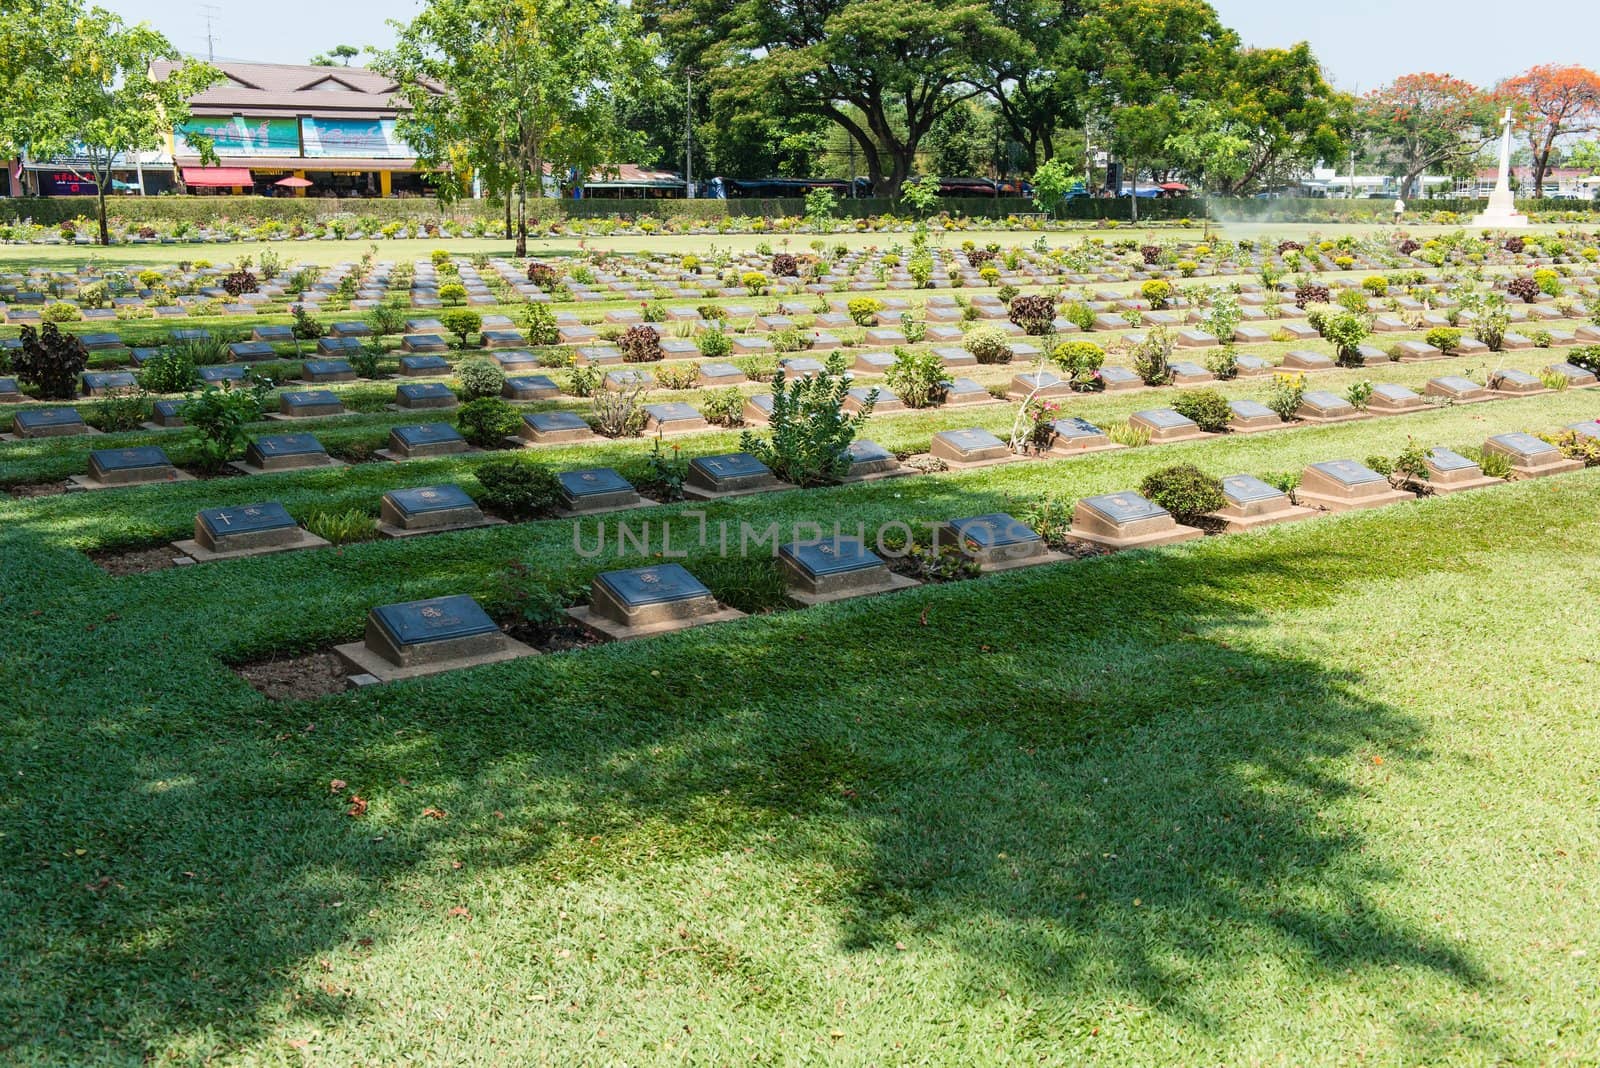 World war two soilder cemetary ground in Thailand, taken on a sunny day